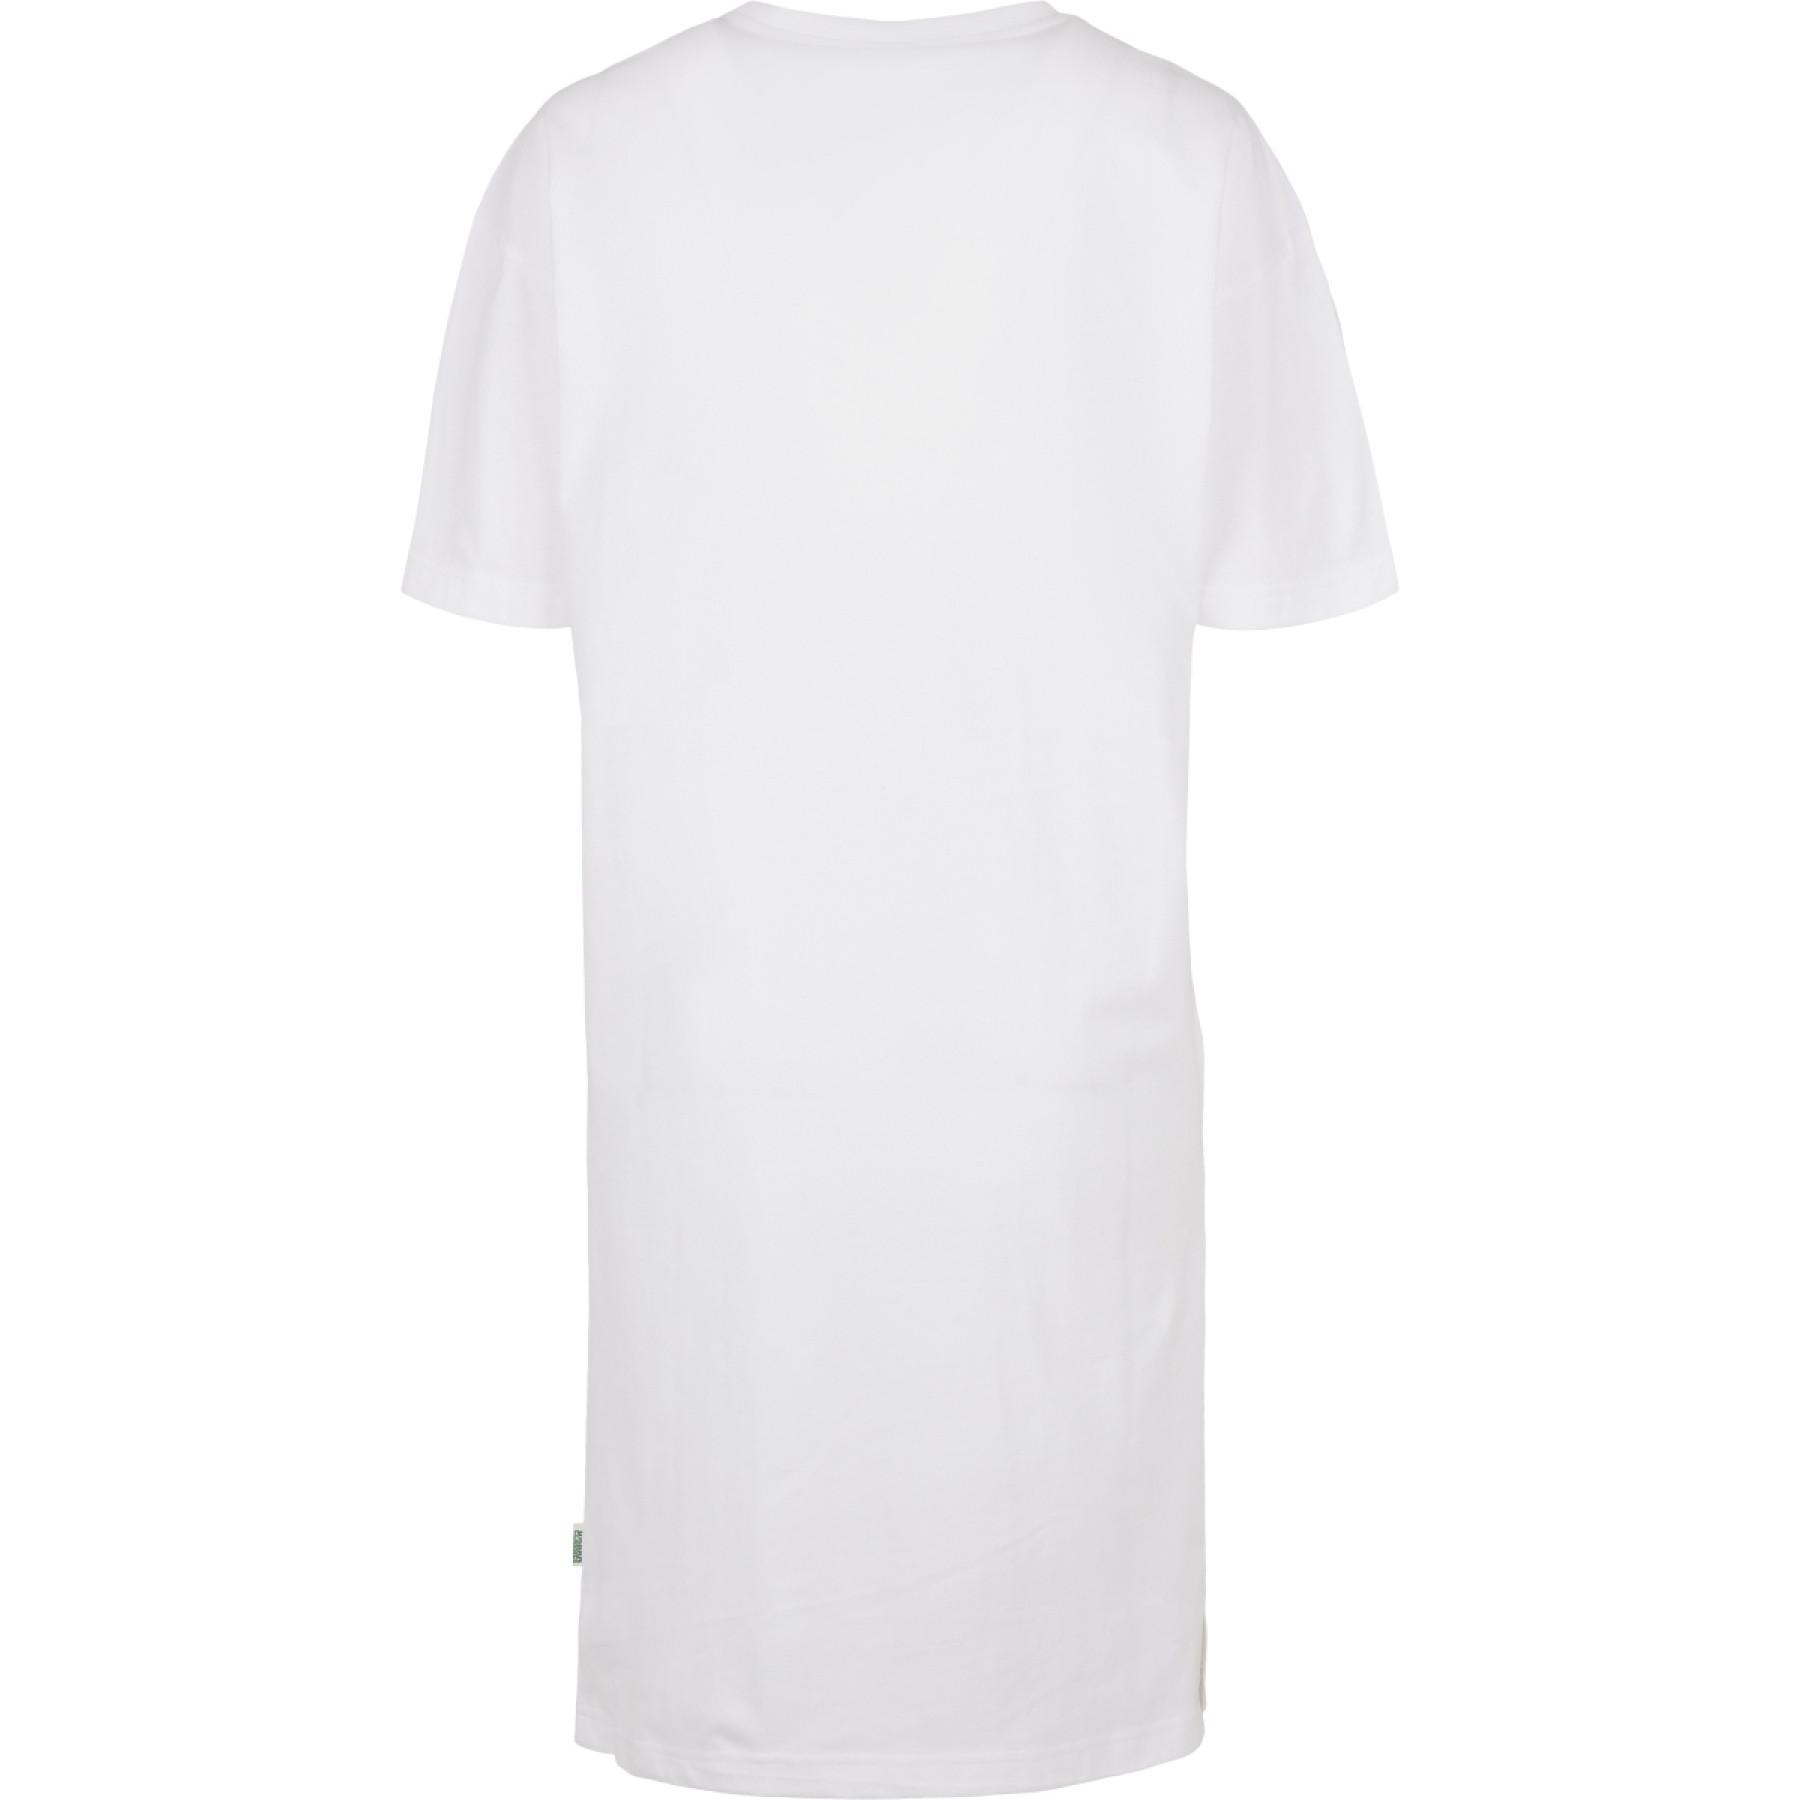 T-shirt de vestido feminino Urban Classics organic oversized slit-grandes tailles